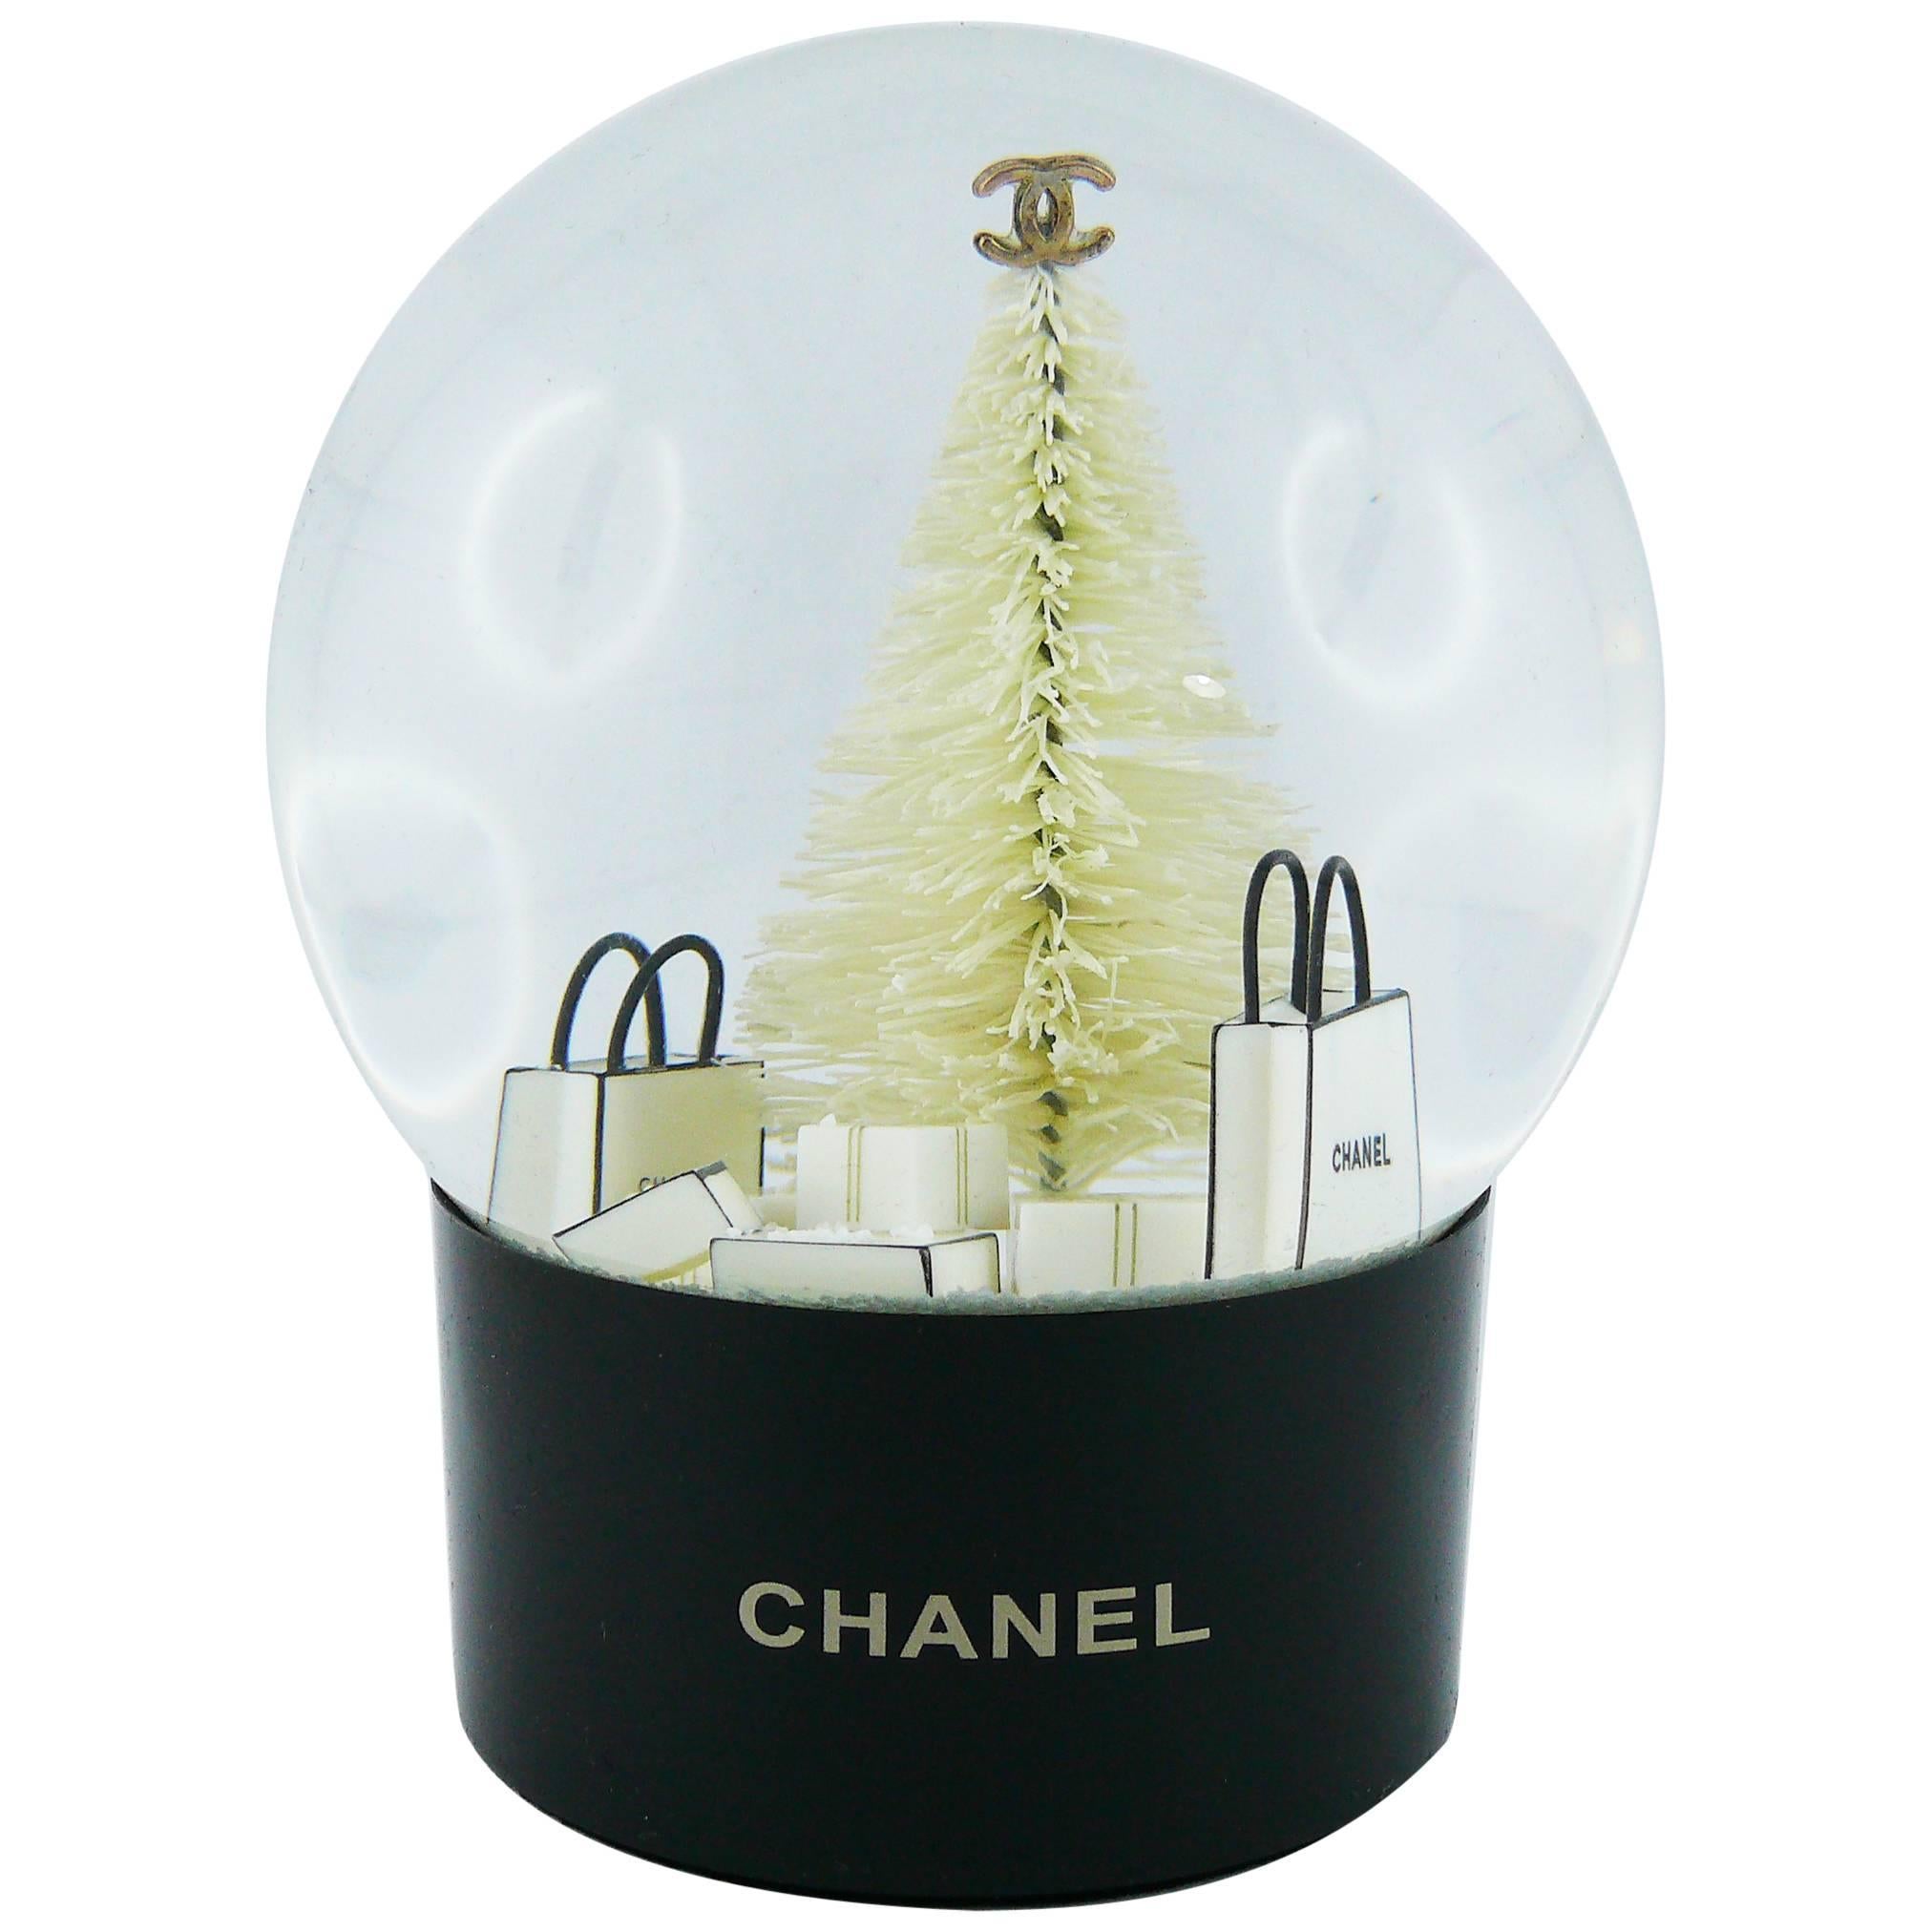 Chanel Snow Dome